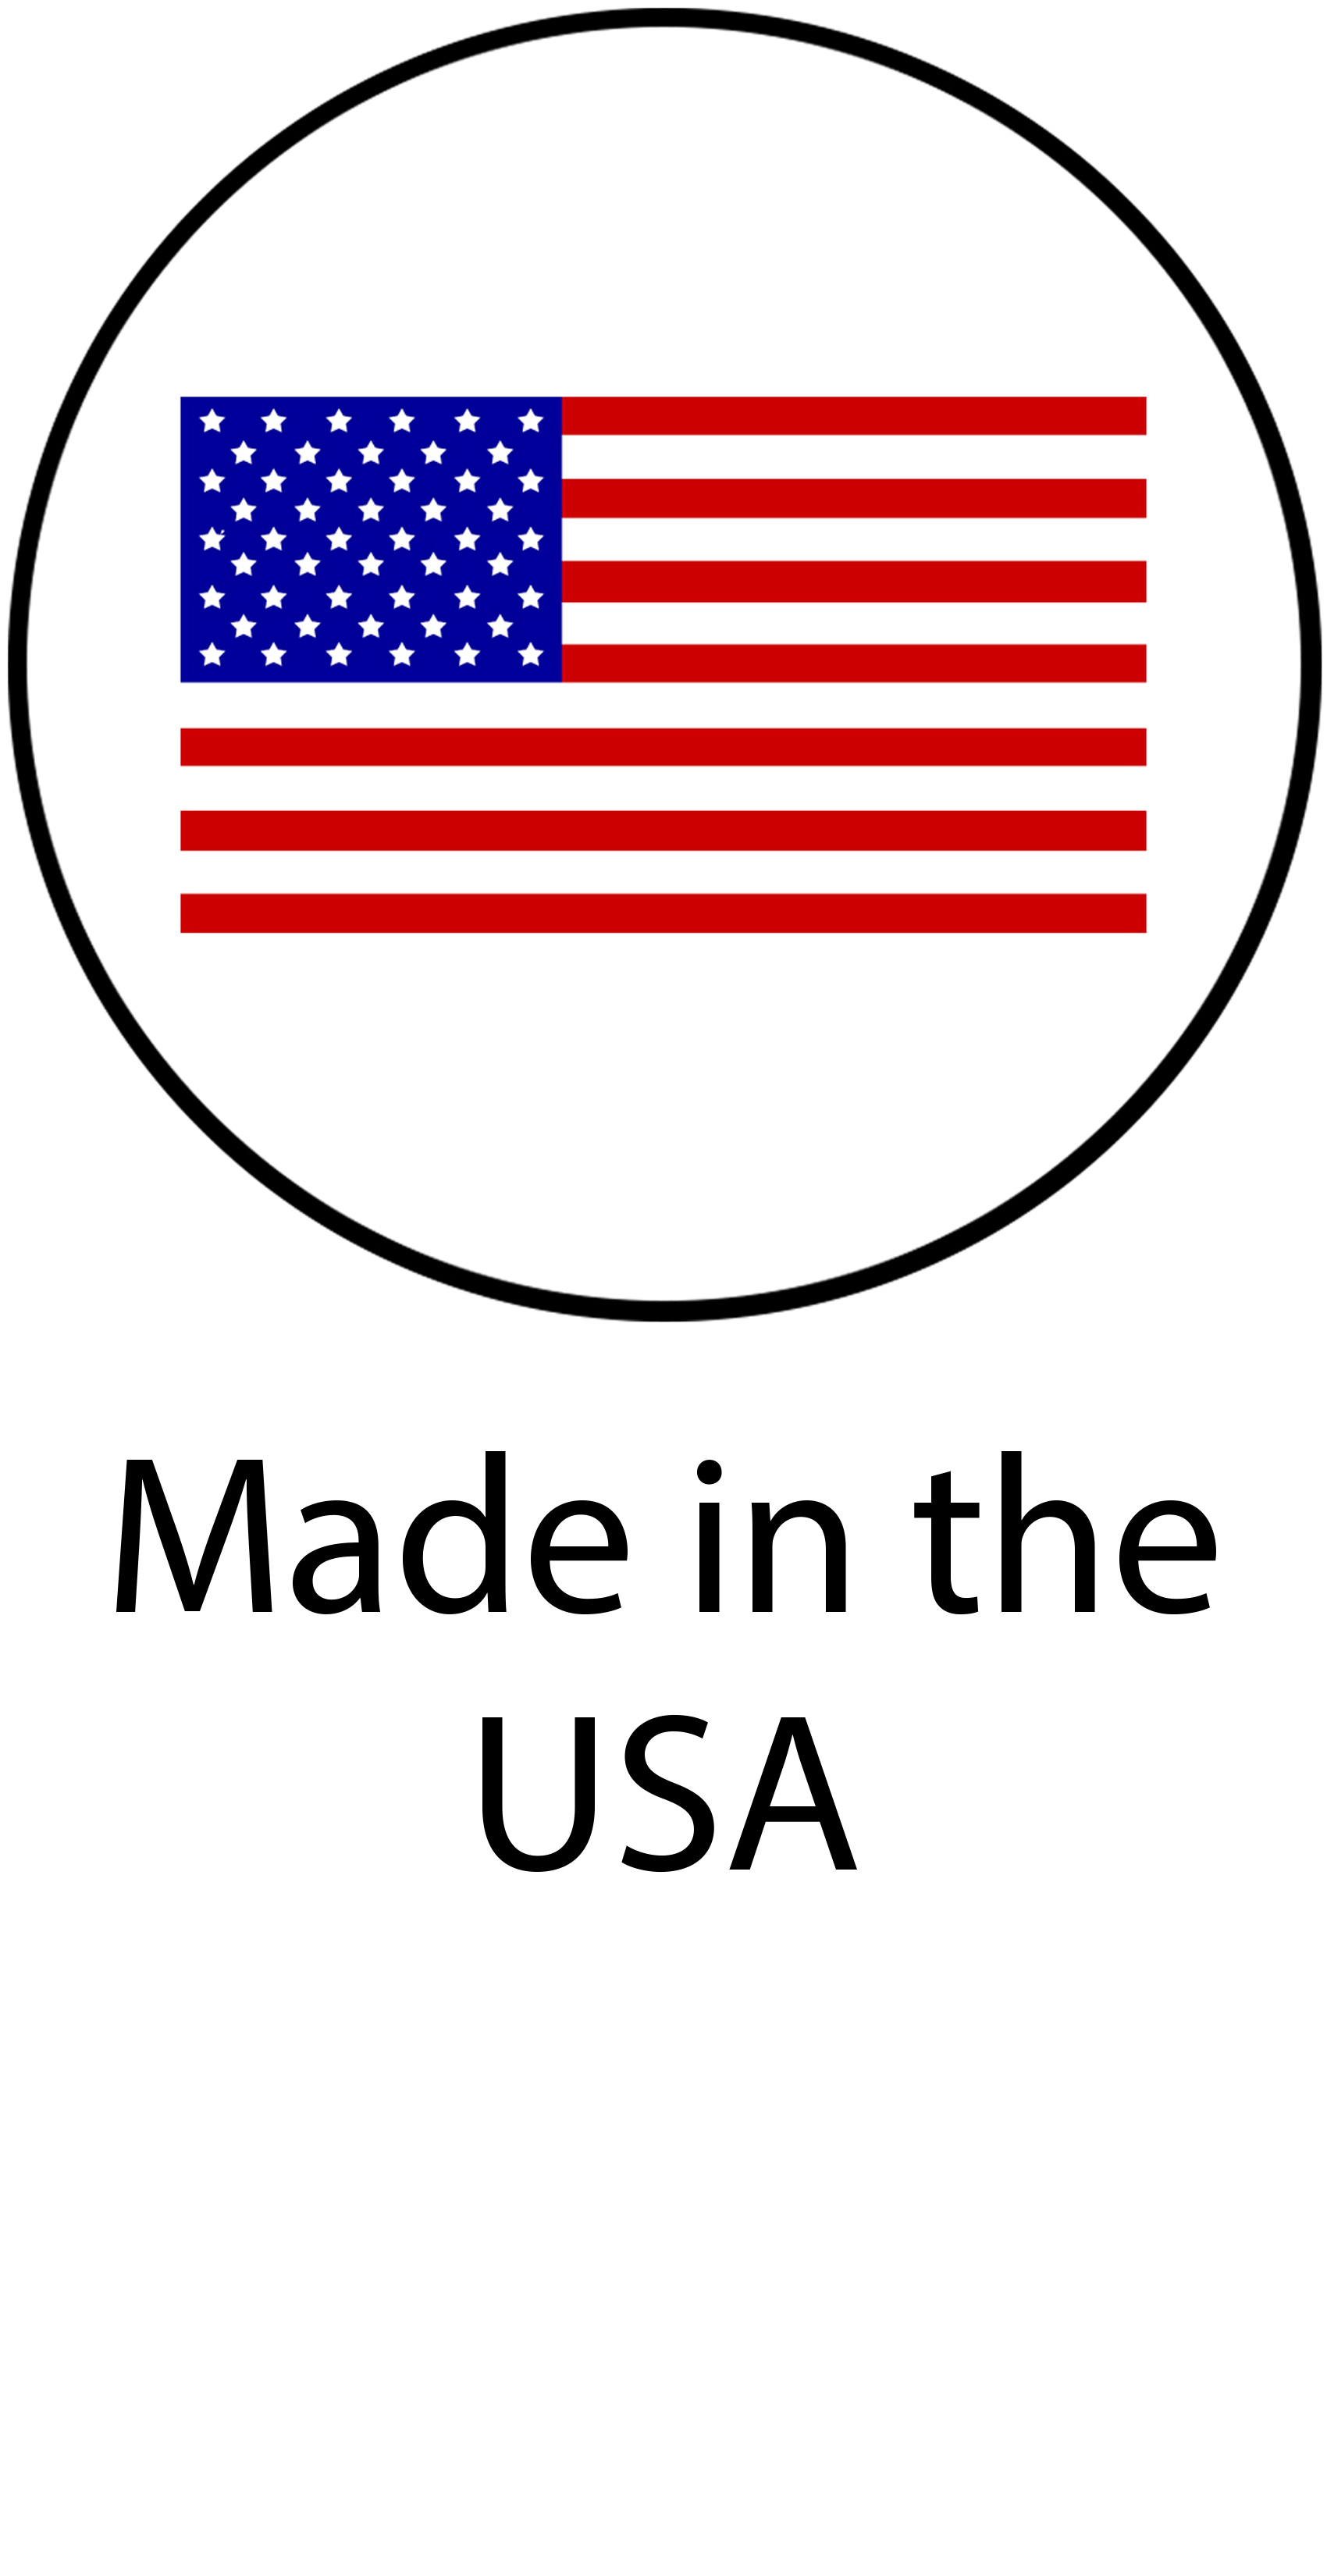 Made in USA.jpg